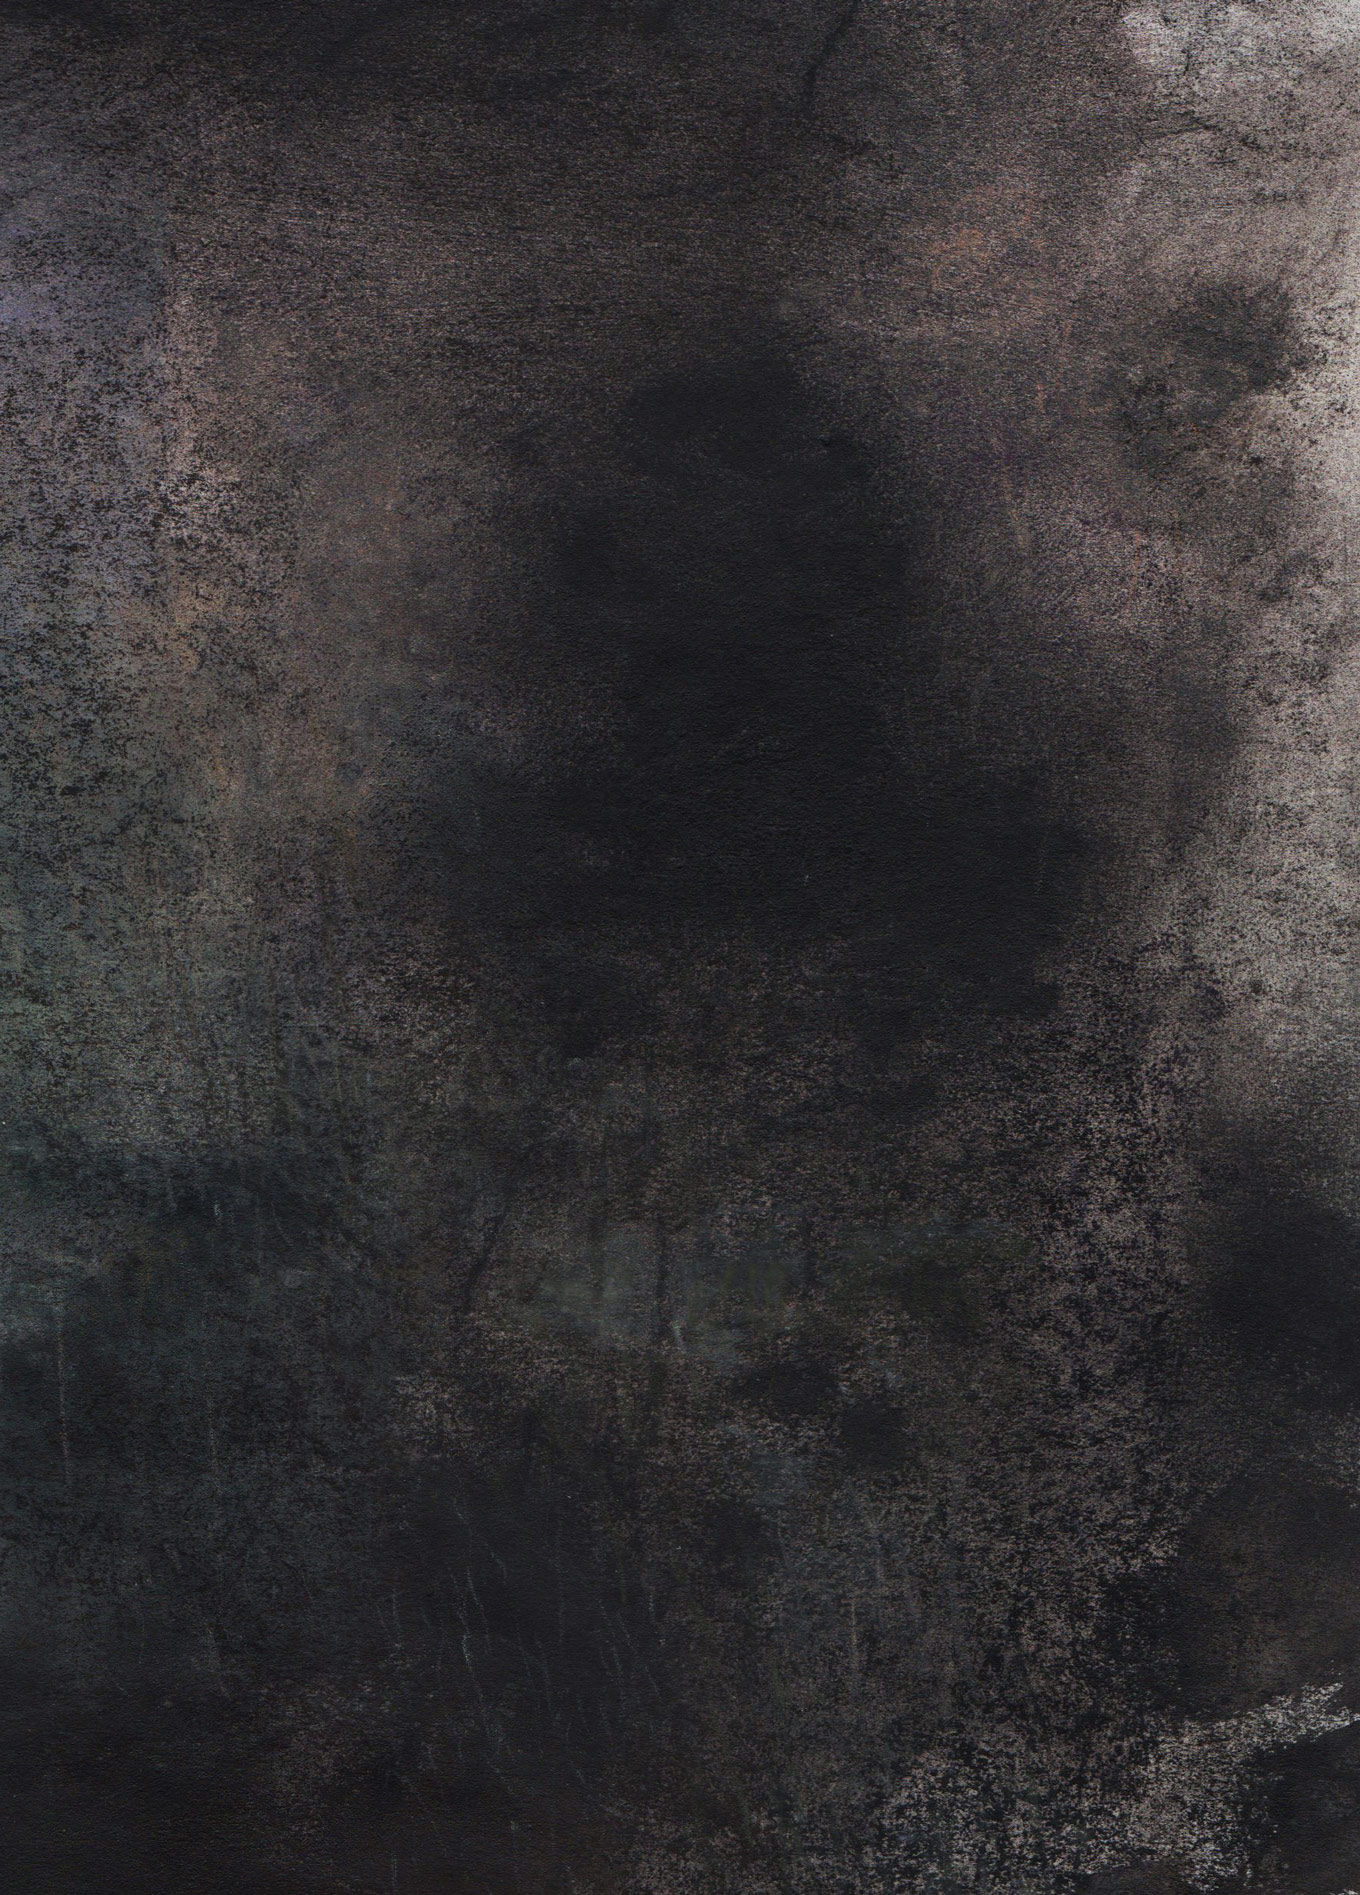 L1288 - Nicholas Herbert, British Artist, mixed media landscape painting of large tree in Aspley Wood, 2021